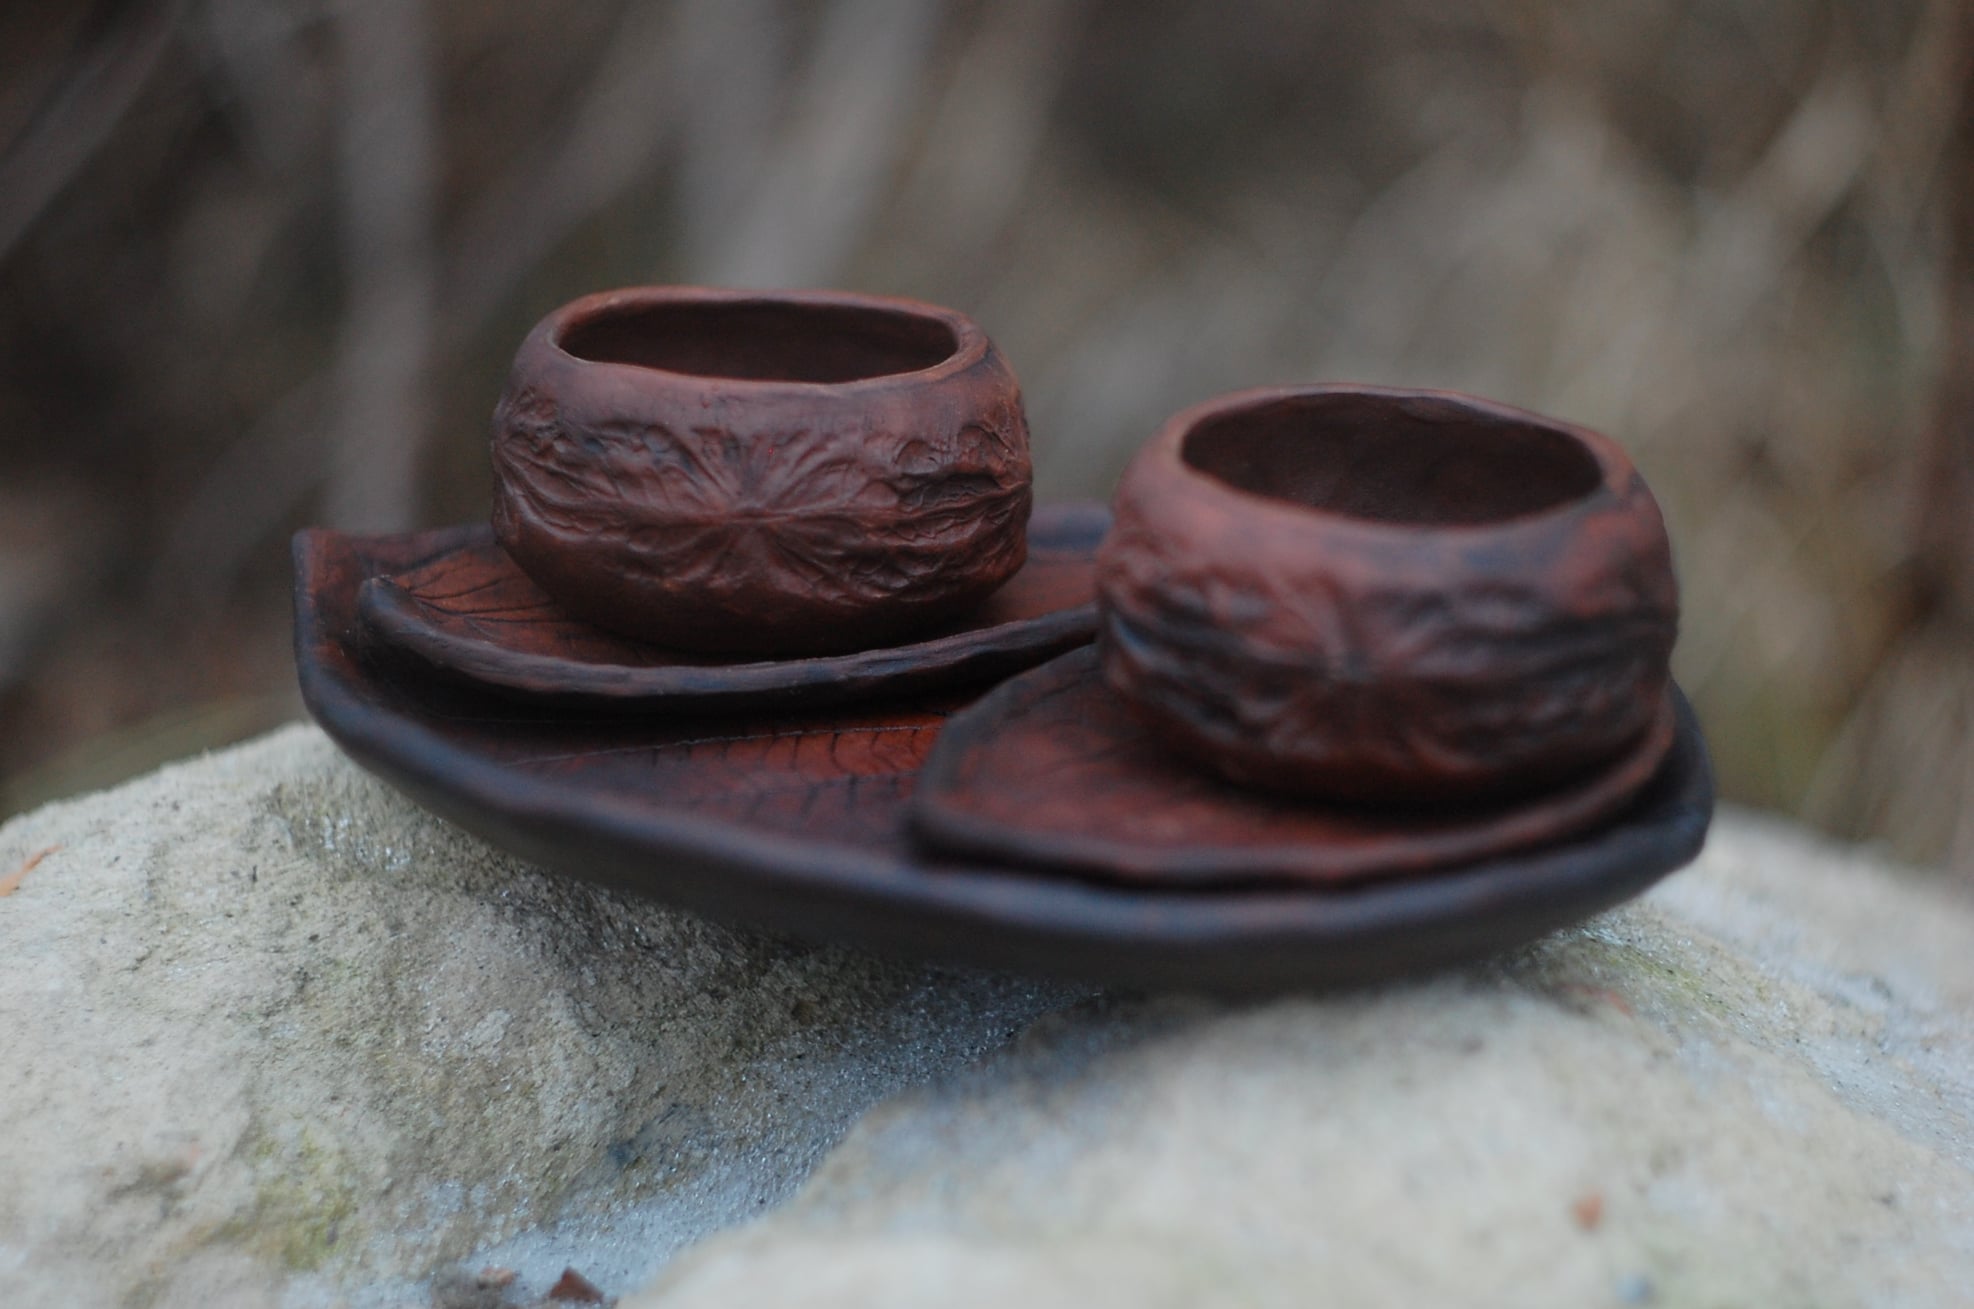 Walnut set of two pottery clay mug and saucers